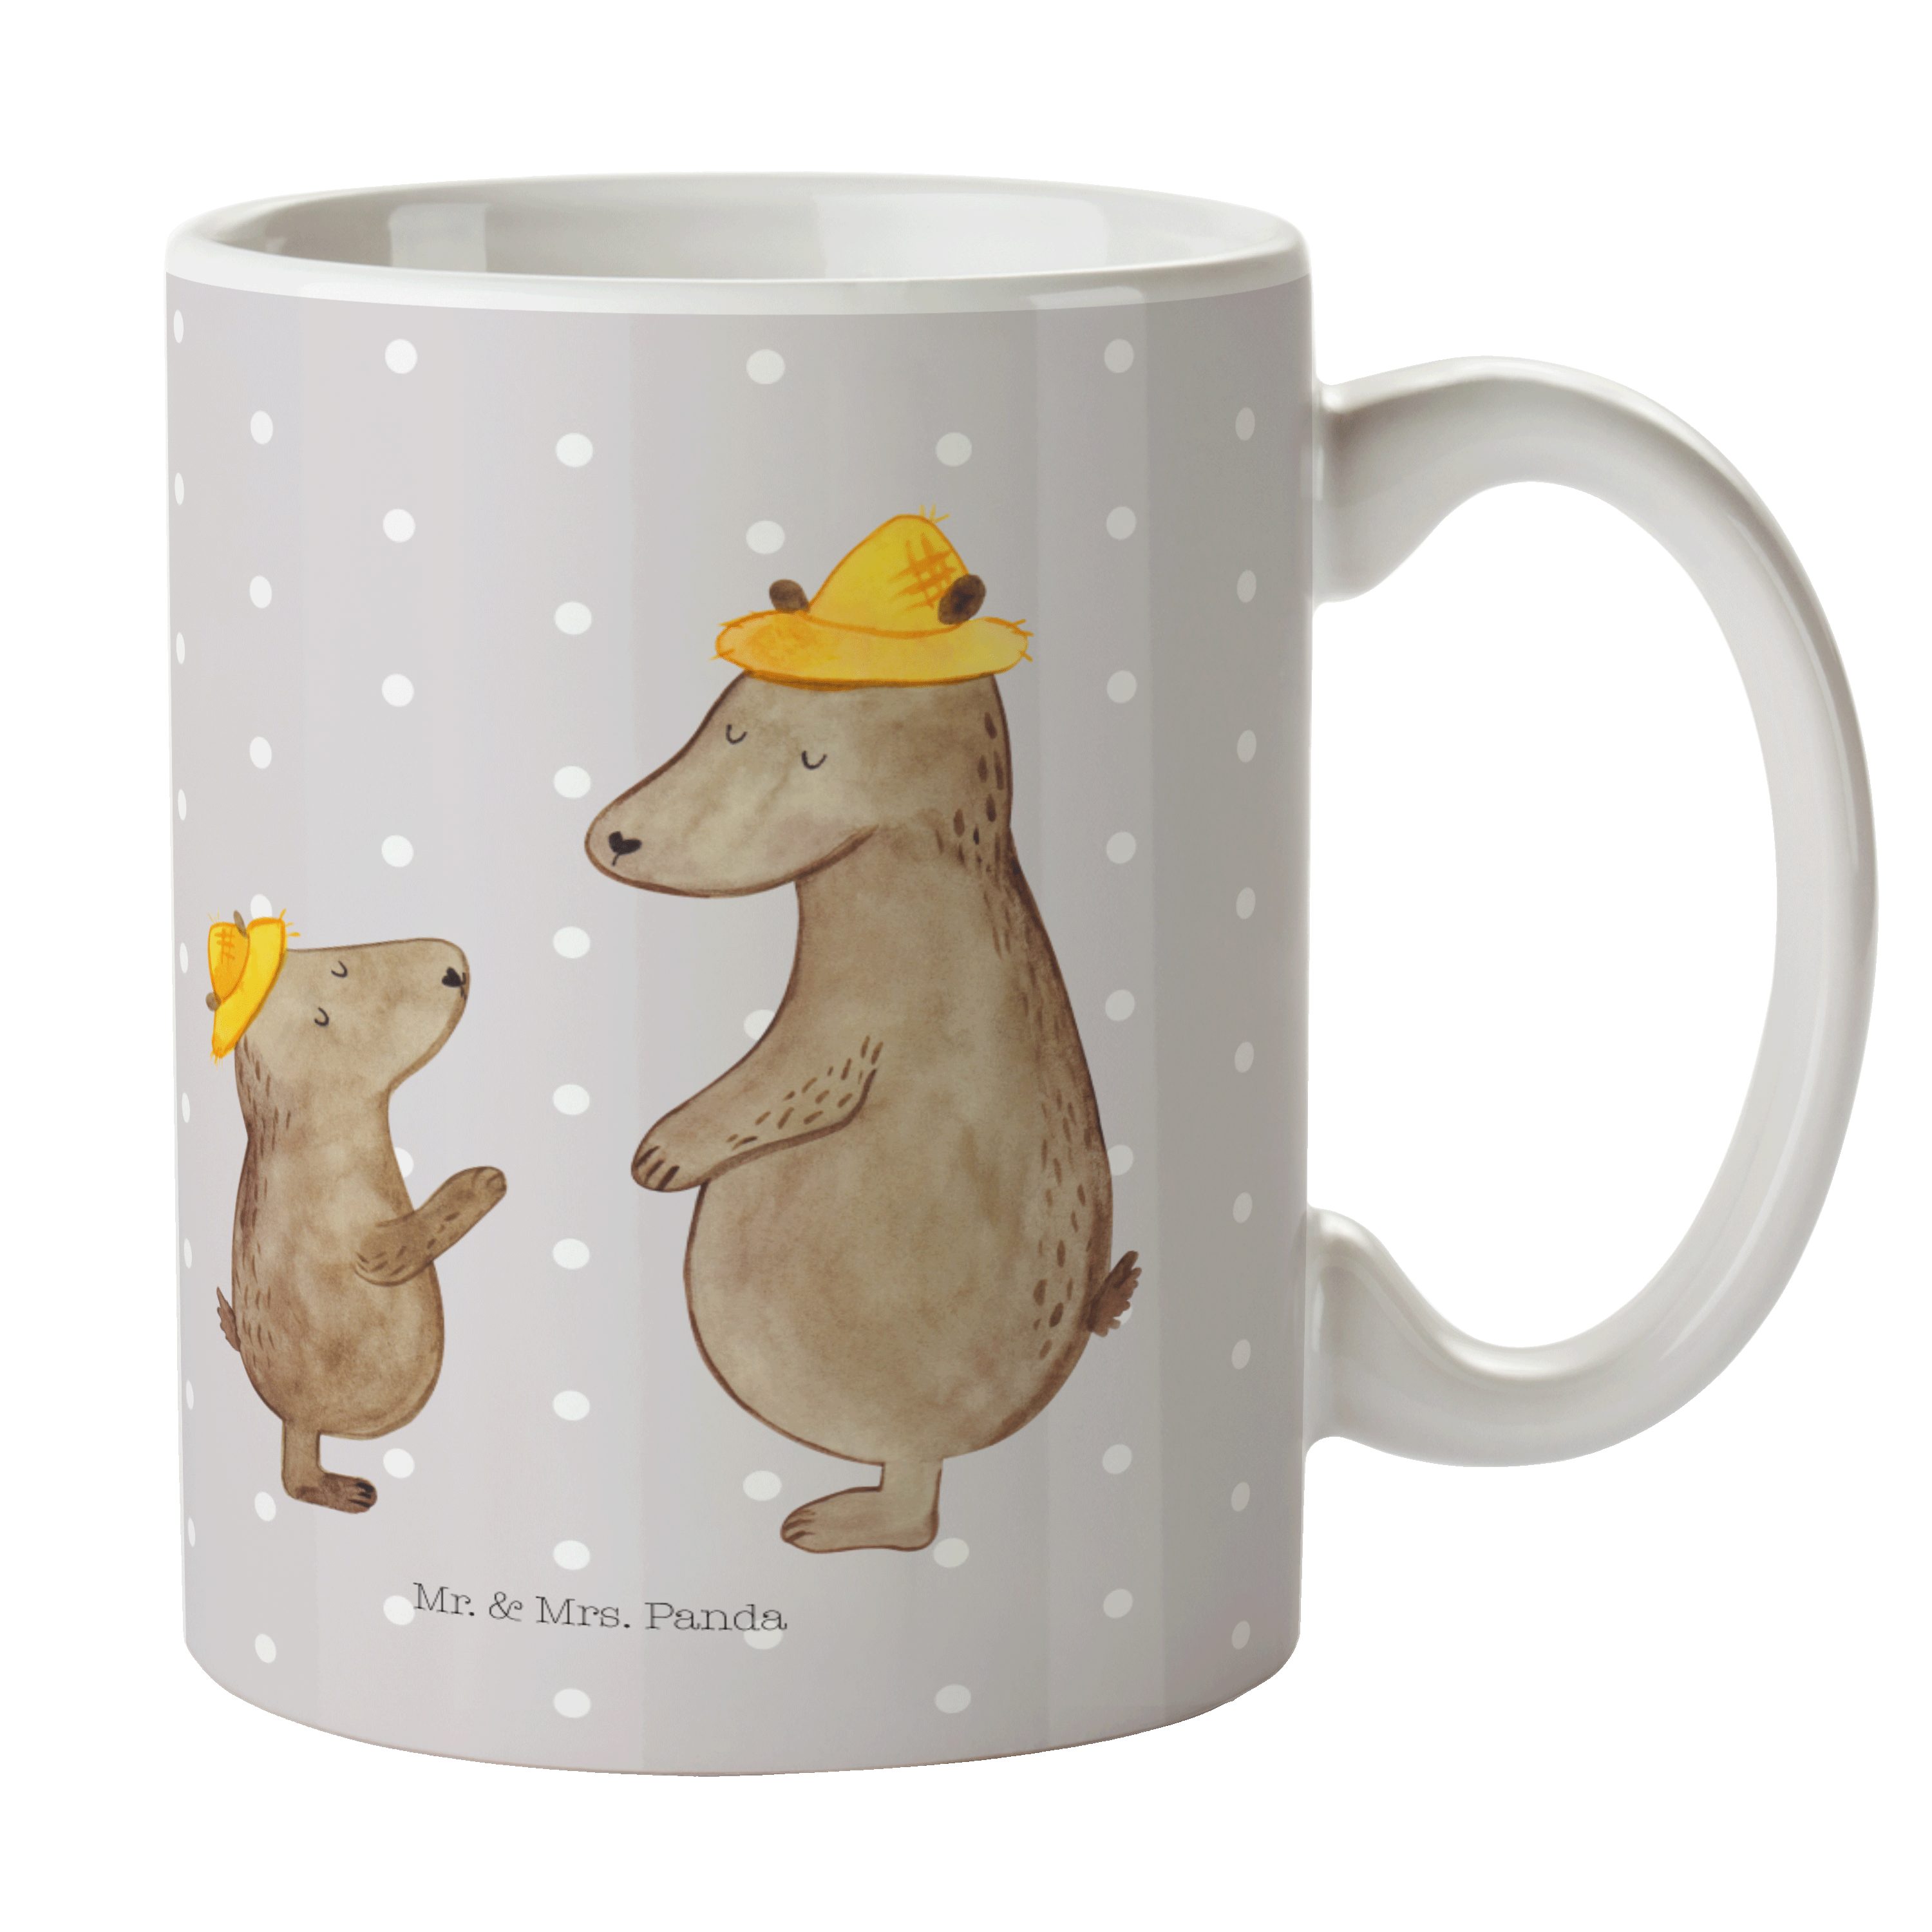 Mr. & Mrs. Panda Tasse Bären mit Hut - Grau Pastell - Geschenk, Kaffeetasse, Tasse, Teetasse, Keramik